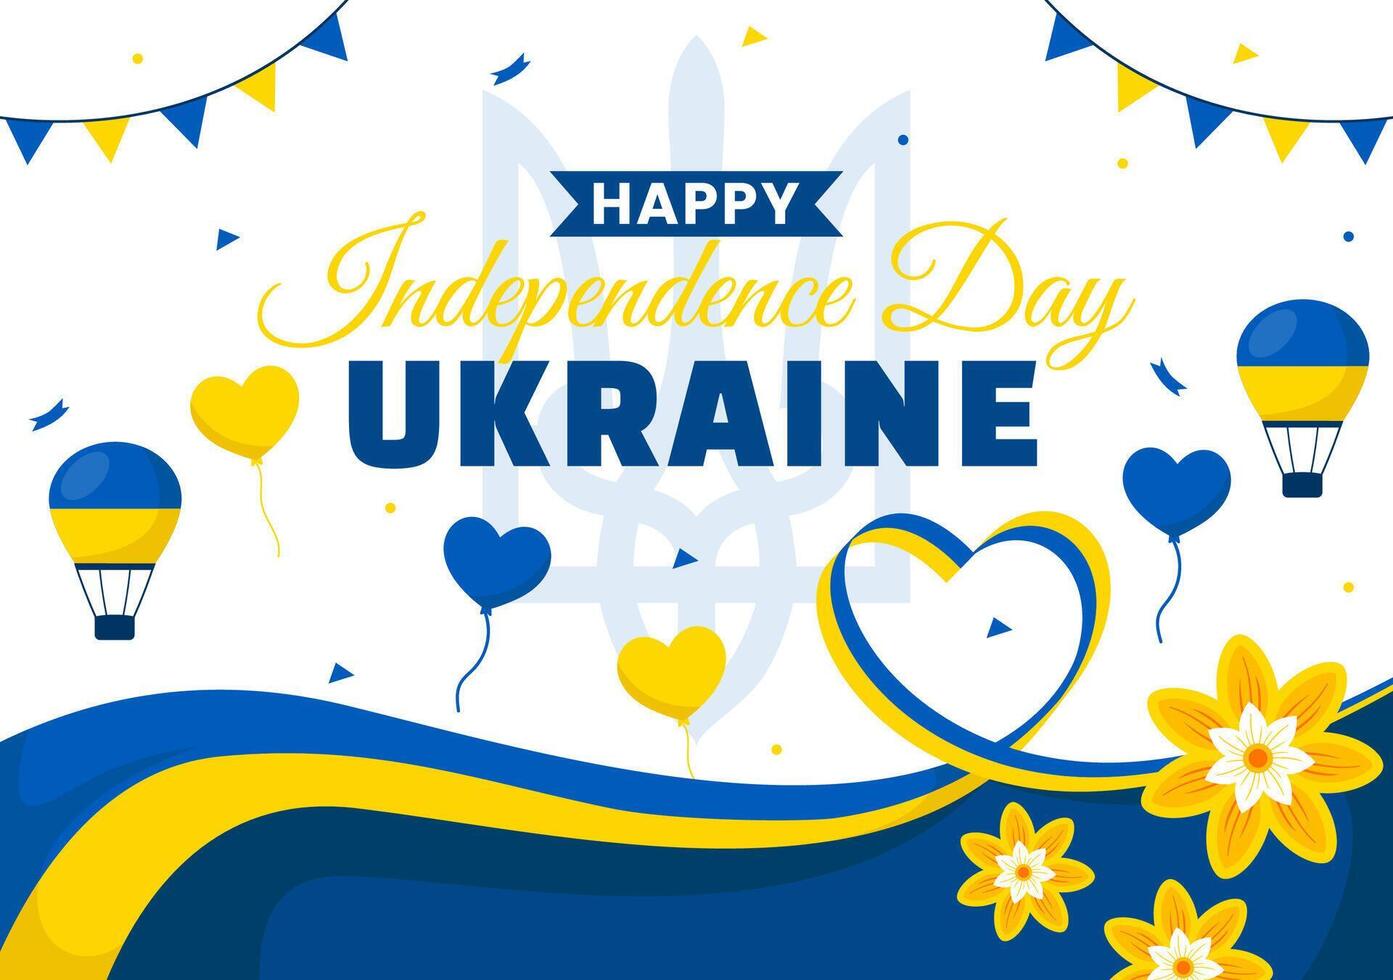 contento Ucrania independencia día ilustración en 24 agosto con ucranio bandera antecedentes en nacional fiesta plano dibujos animados antecedentes vector